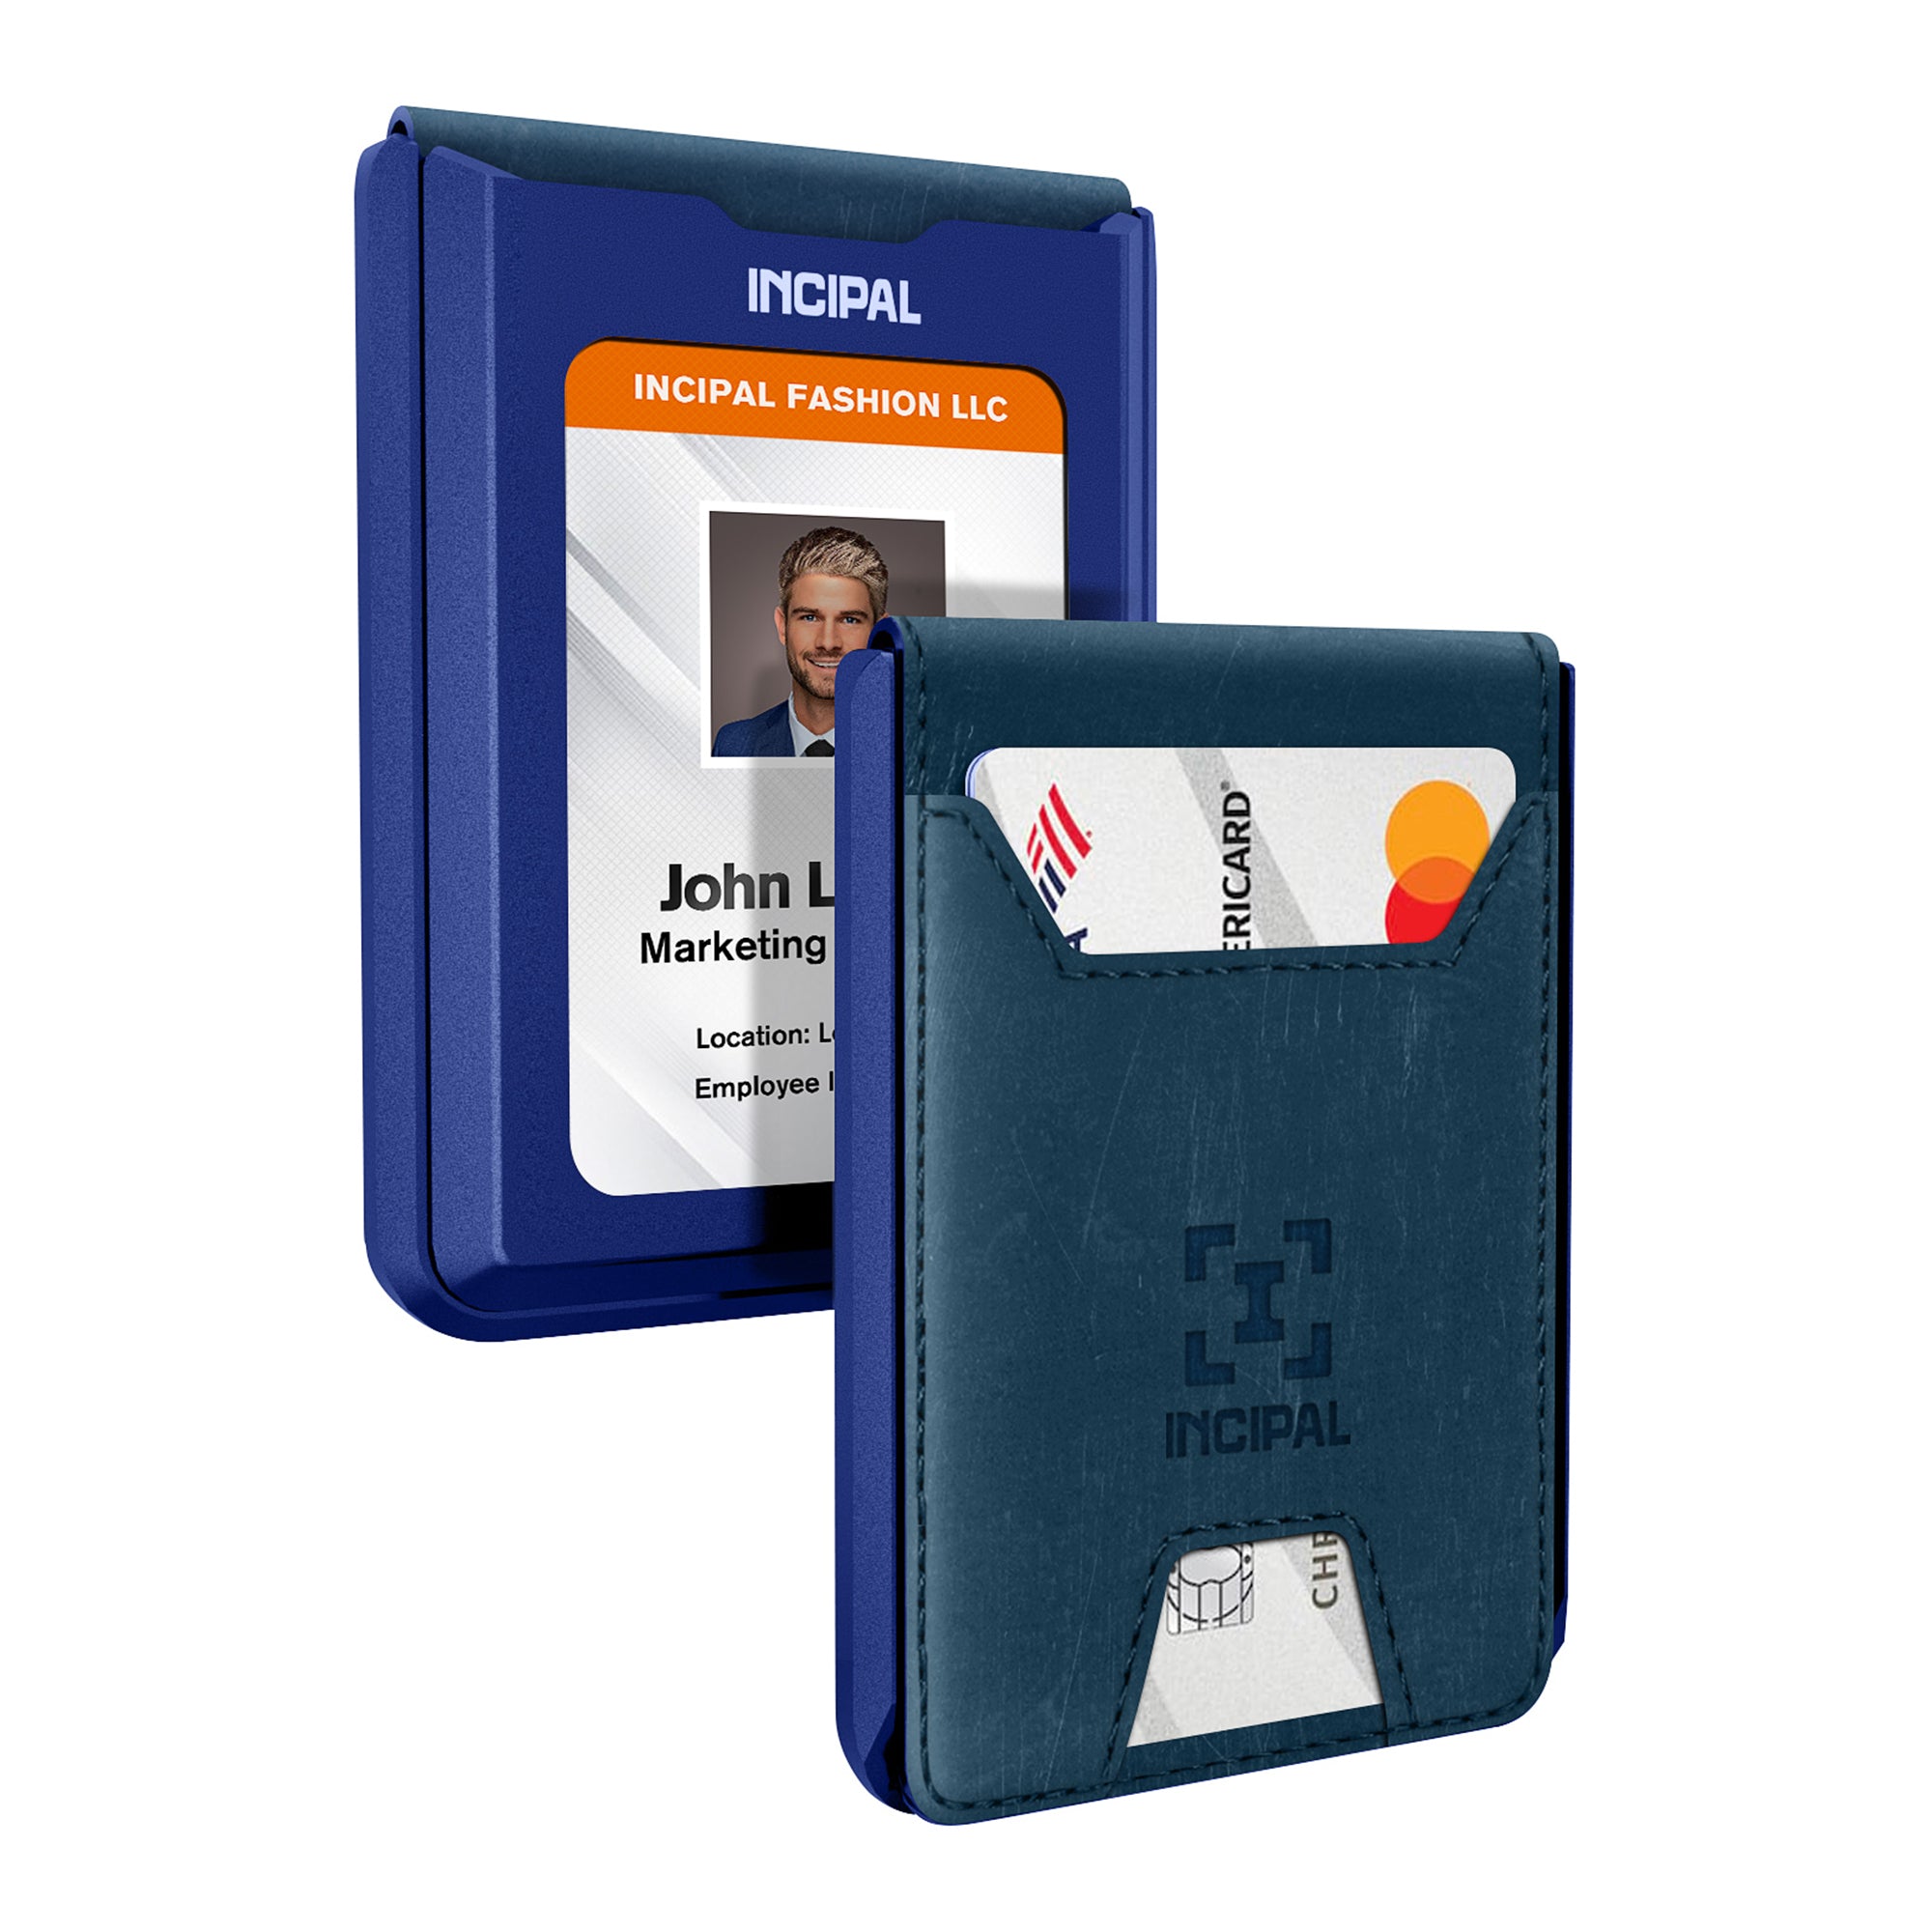 Lincoln, Black & Blue Leather RFID-Blocking Card Holder